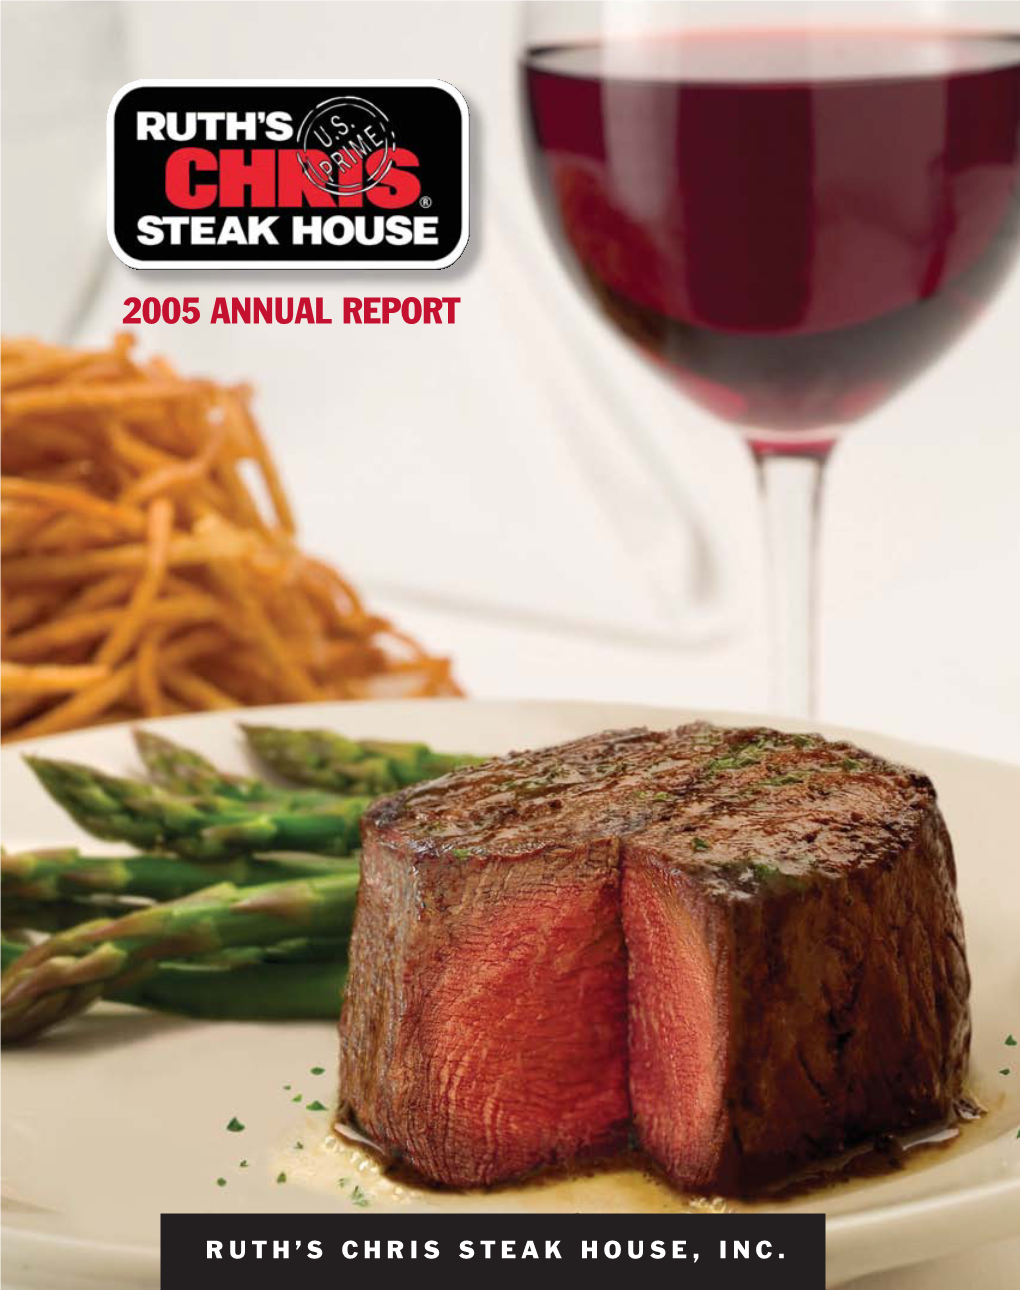 Ruth's Chris Steak House, Inc